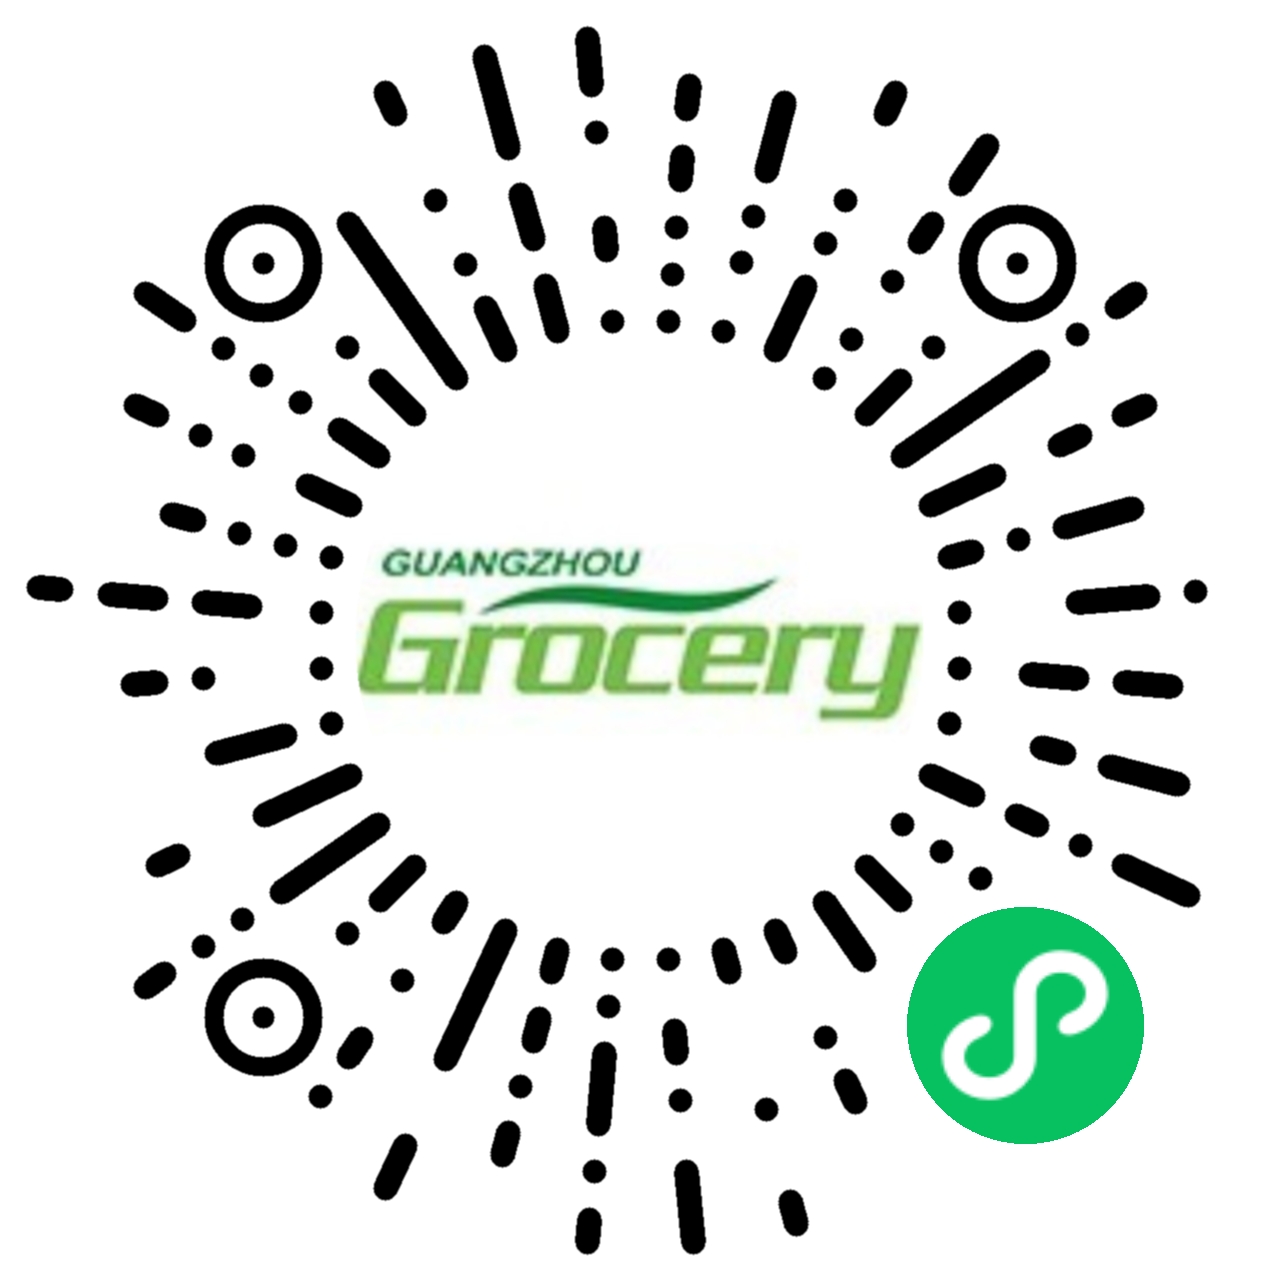 Sales - Guangzhou Grocery